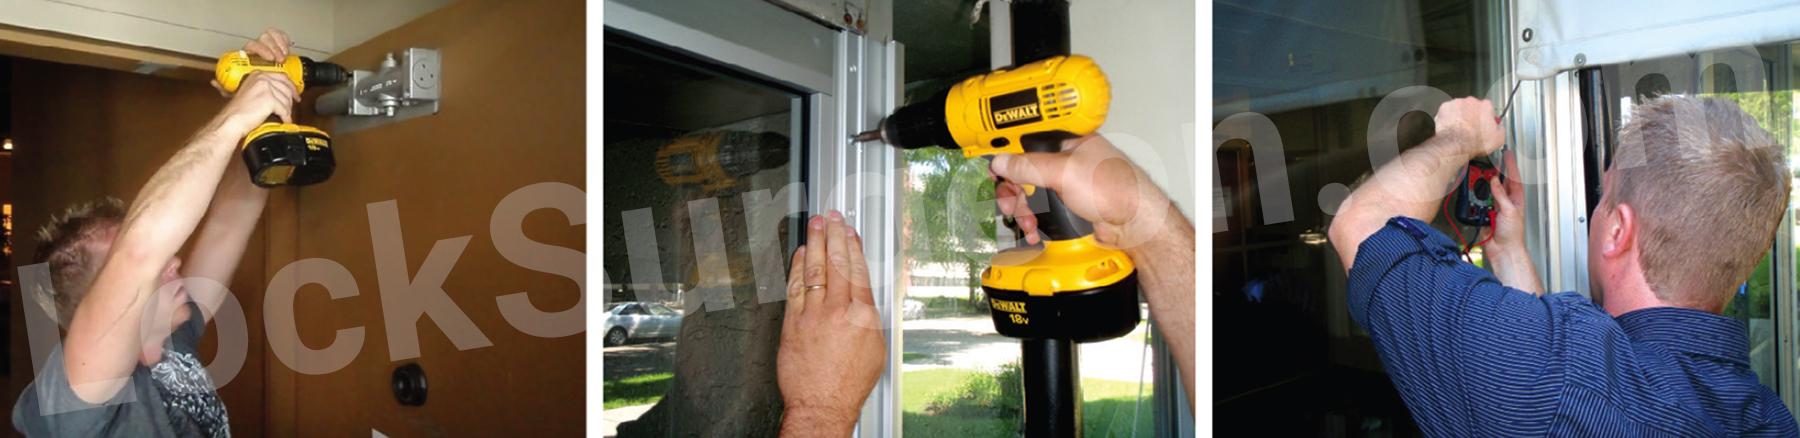 Acheson door opener access control installation and repairs.